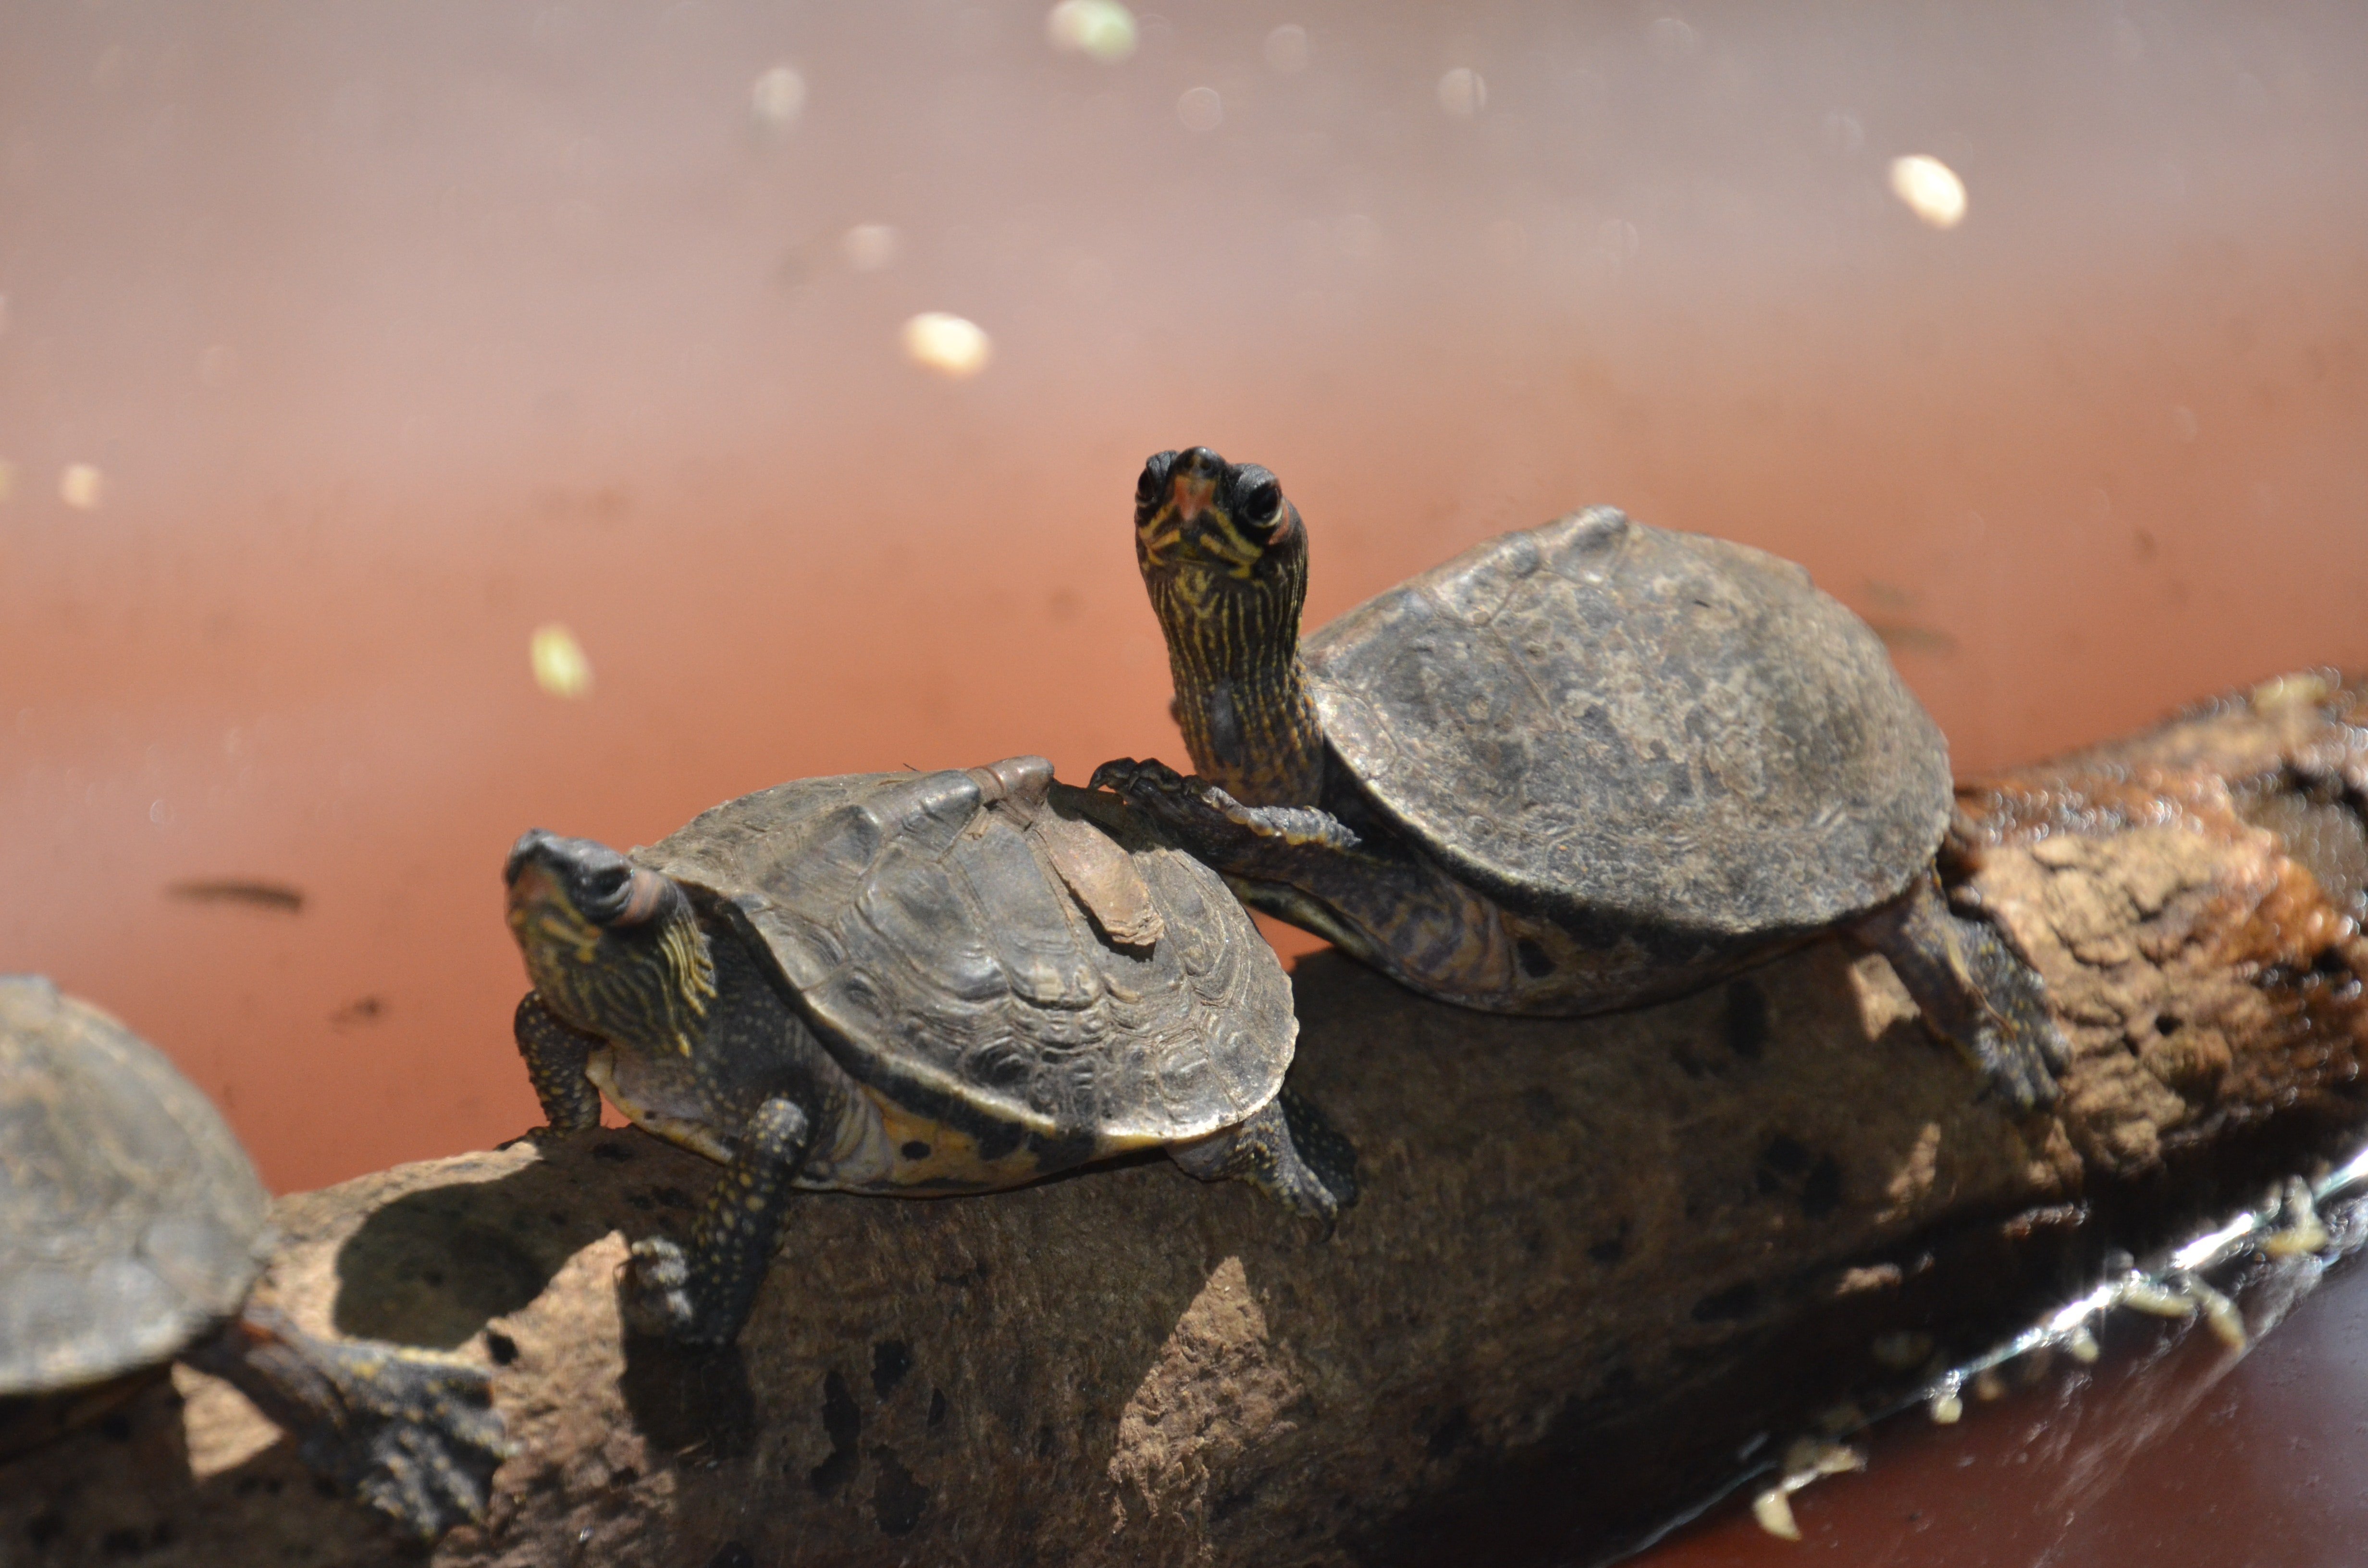 Drei Schildkröten. | Quelle: Pexels/SamarPatil